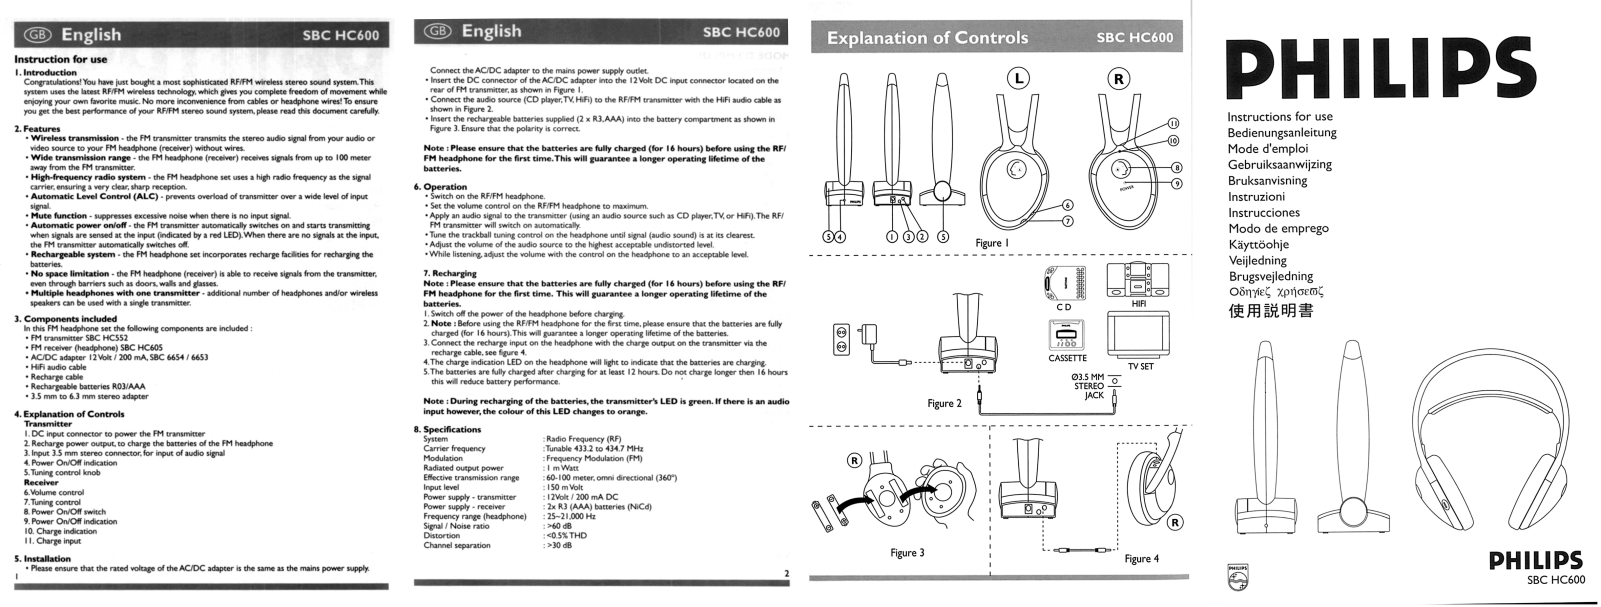 Philips SBCHC600/00 User Manual